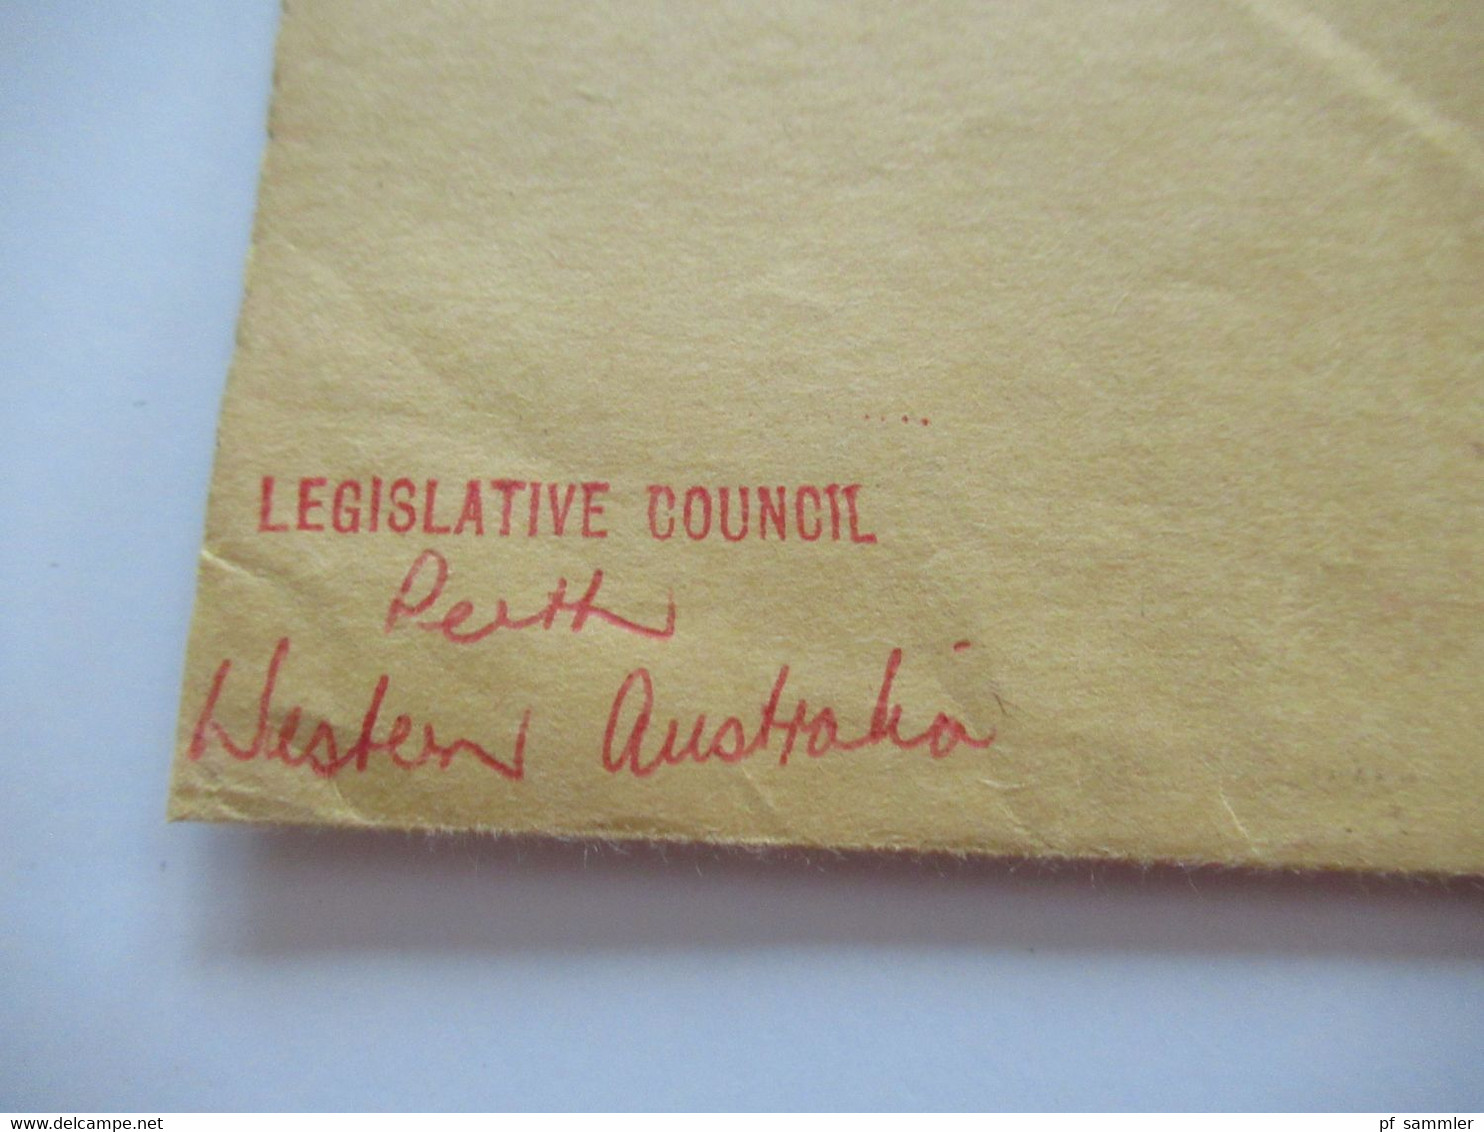 1980 Umschlag OHMS Und Stempel Legislative Council Parliament House Perth W.A Einschreiben Perth Parliament House - Lettres & Documents